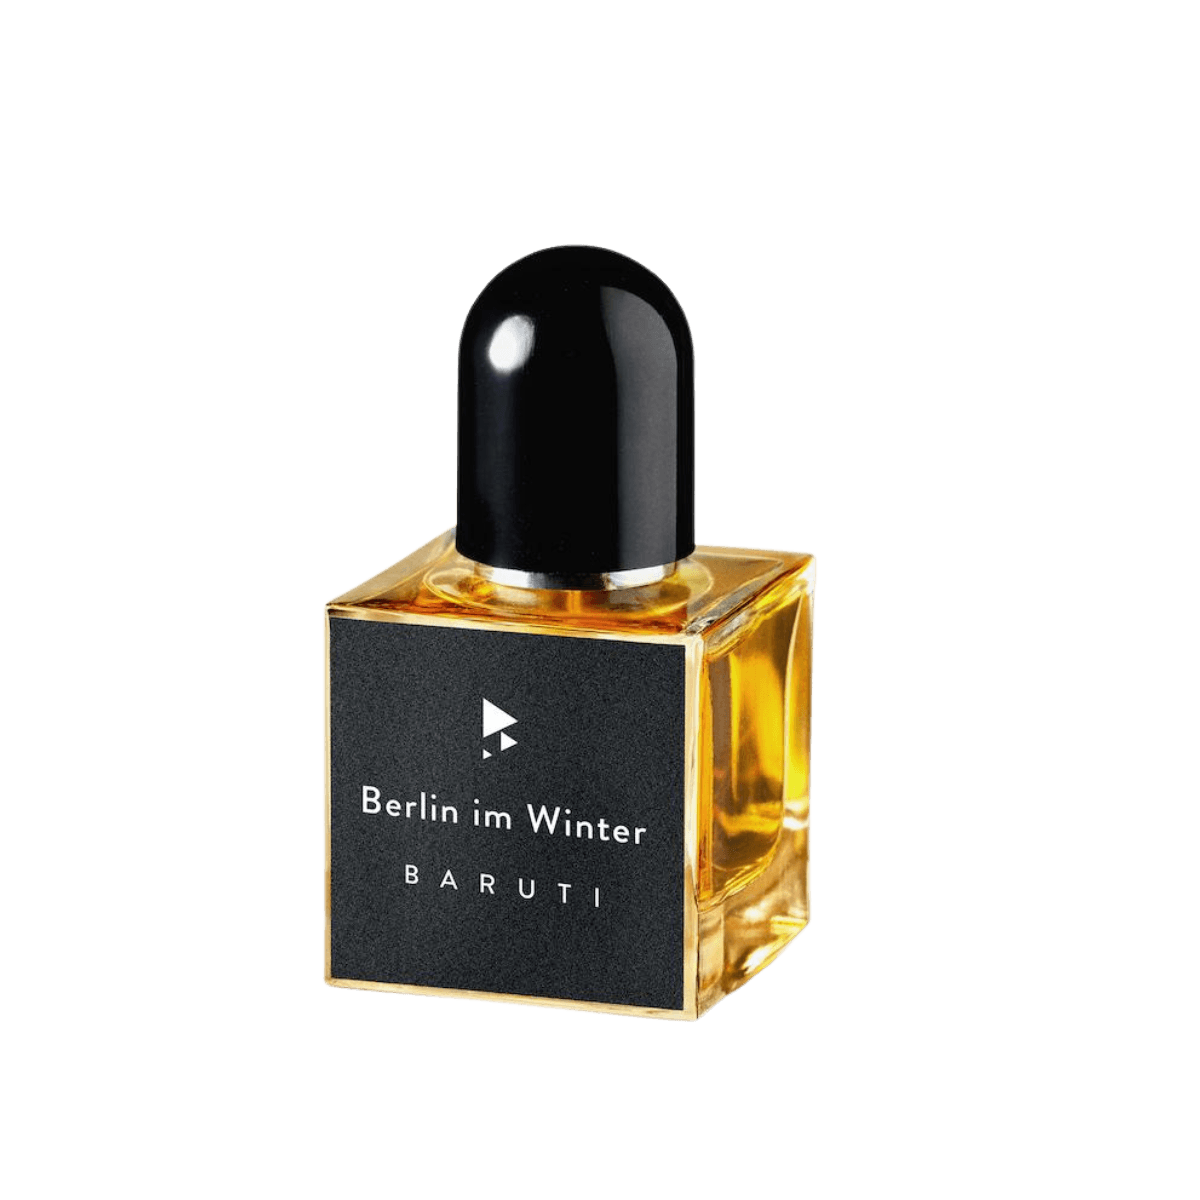 Image of the perfume Berlin im Winter by the brand Baruti